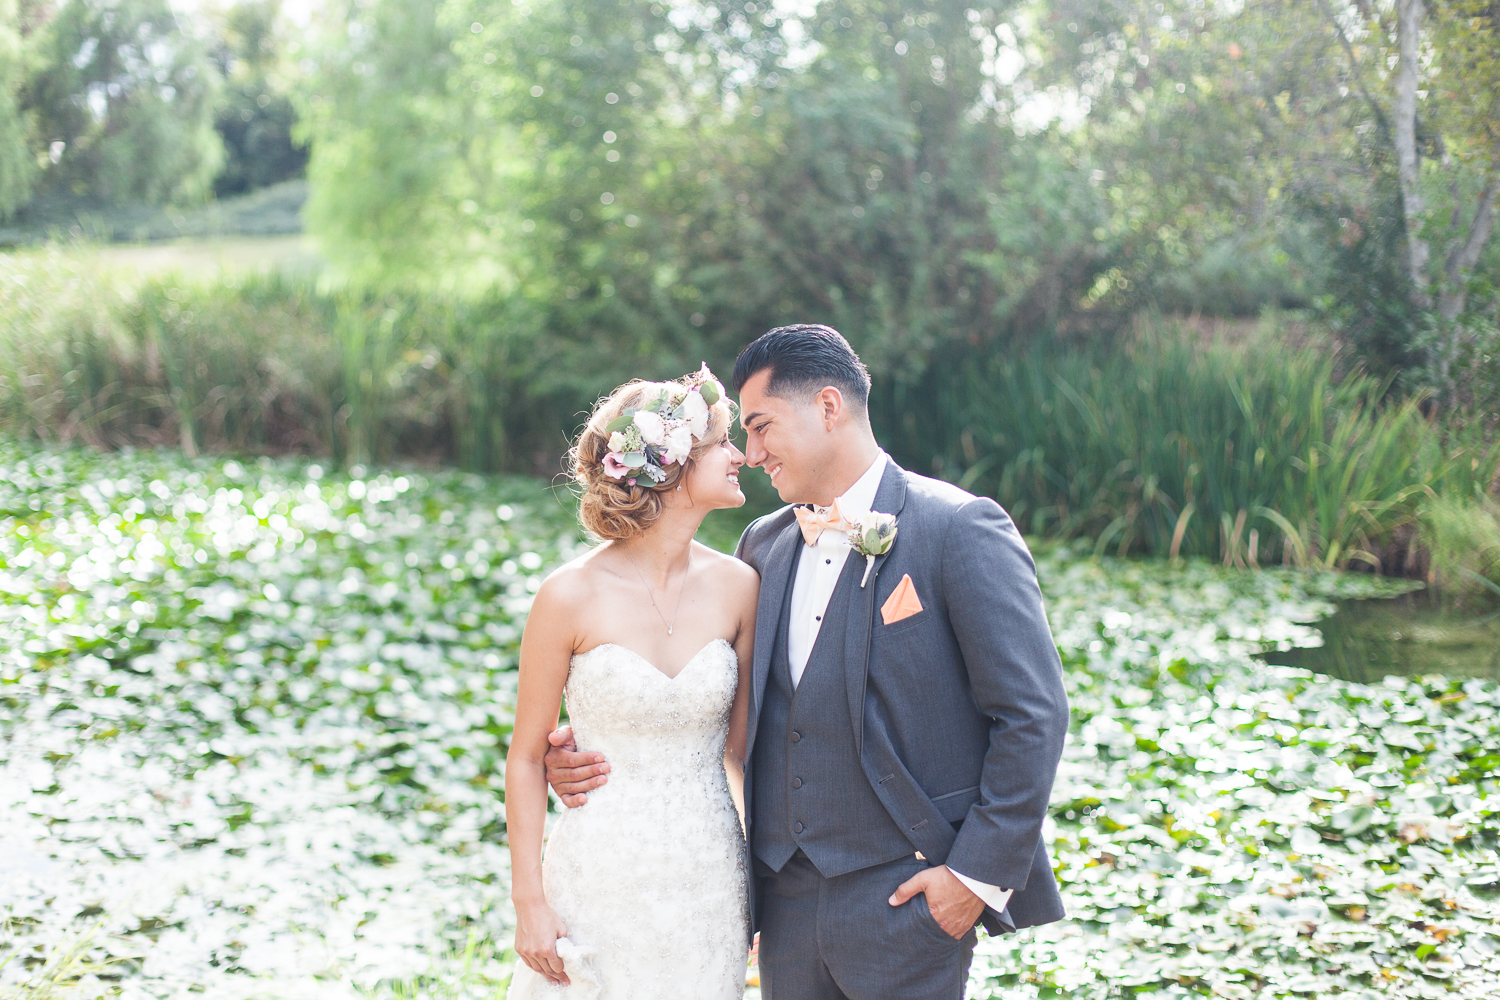 Claudia & Hector’s Wedding | Oak Creek Golf Club in Irvine, CA